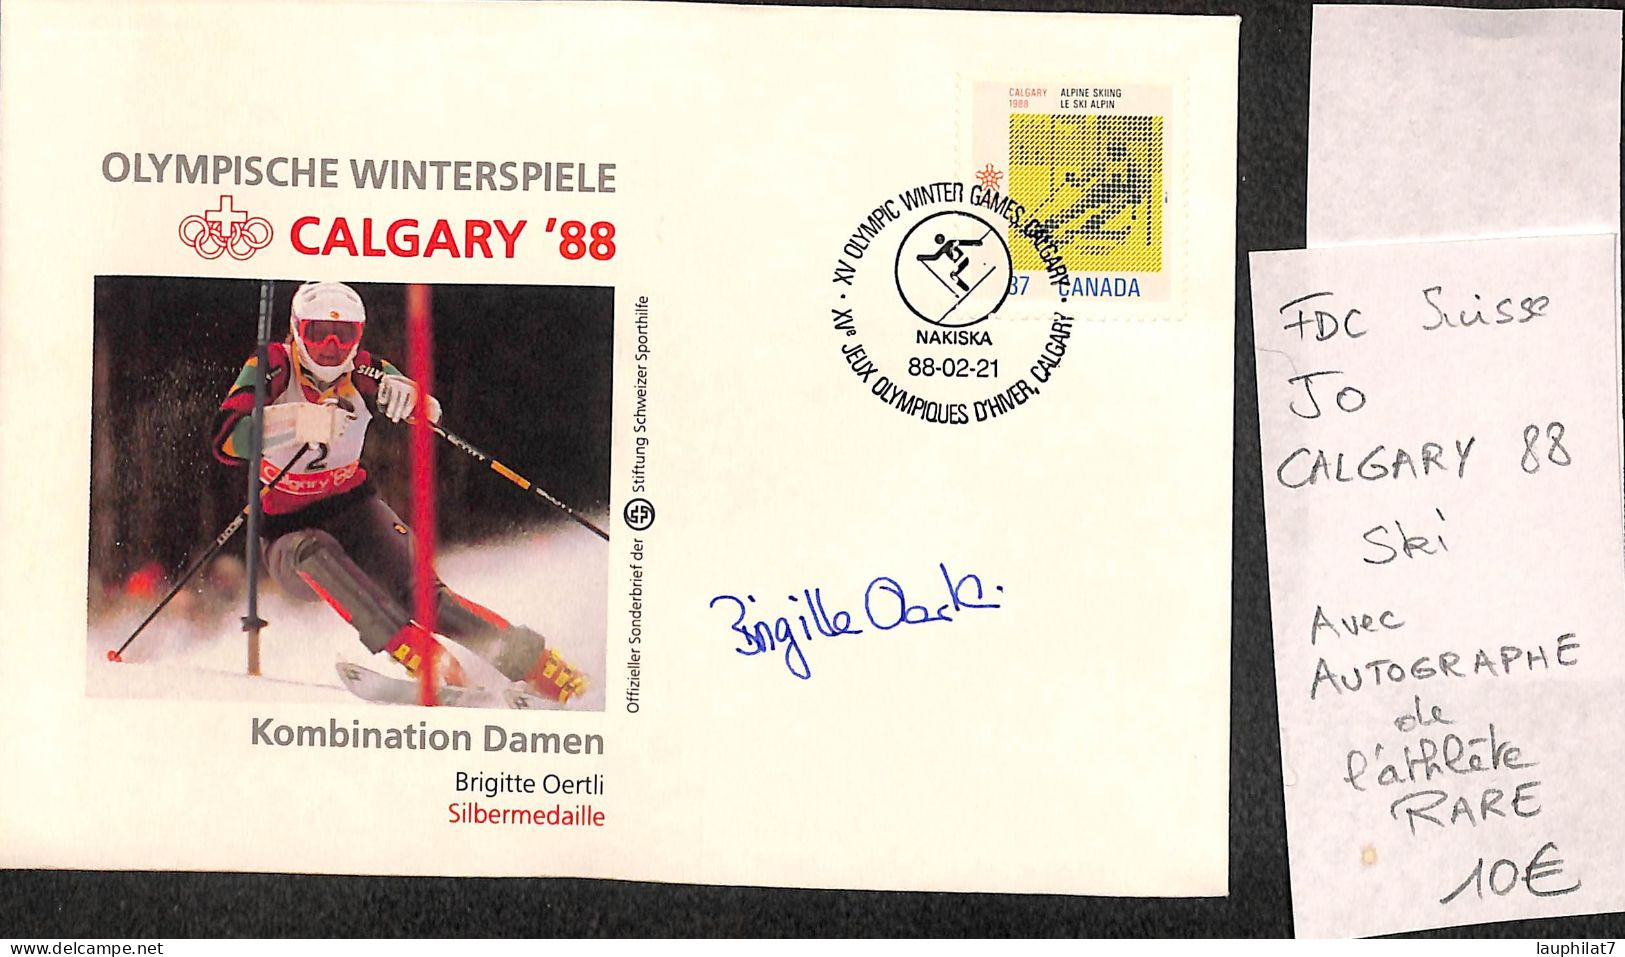 [900092]TB//-Suisse 1988 - FDC, Documents, Brigitte Oertli, Calgary, Avec Autographe De L'athlète, RARE, Jeux Olympique - Inverno1988: Calgary